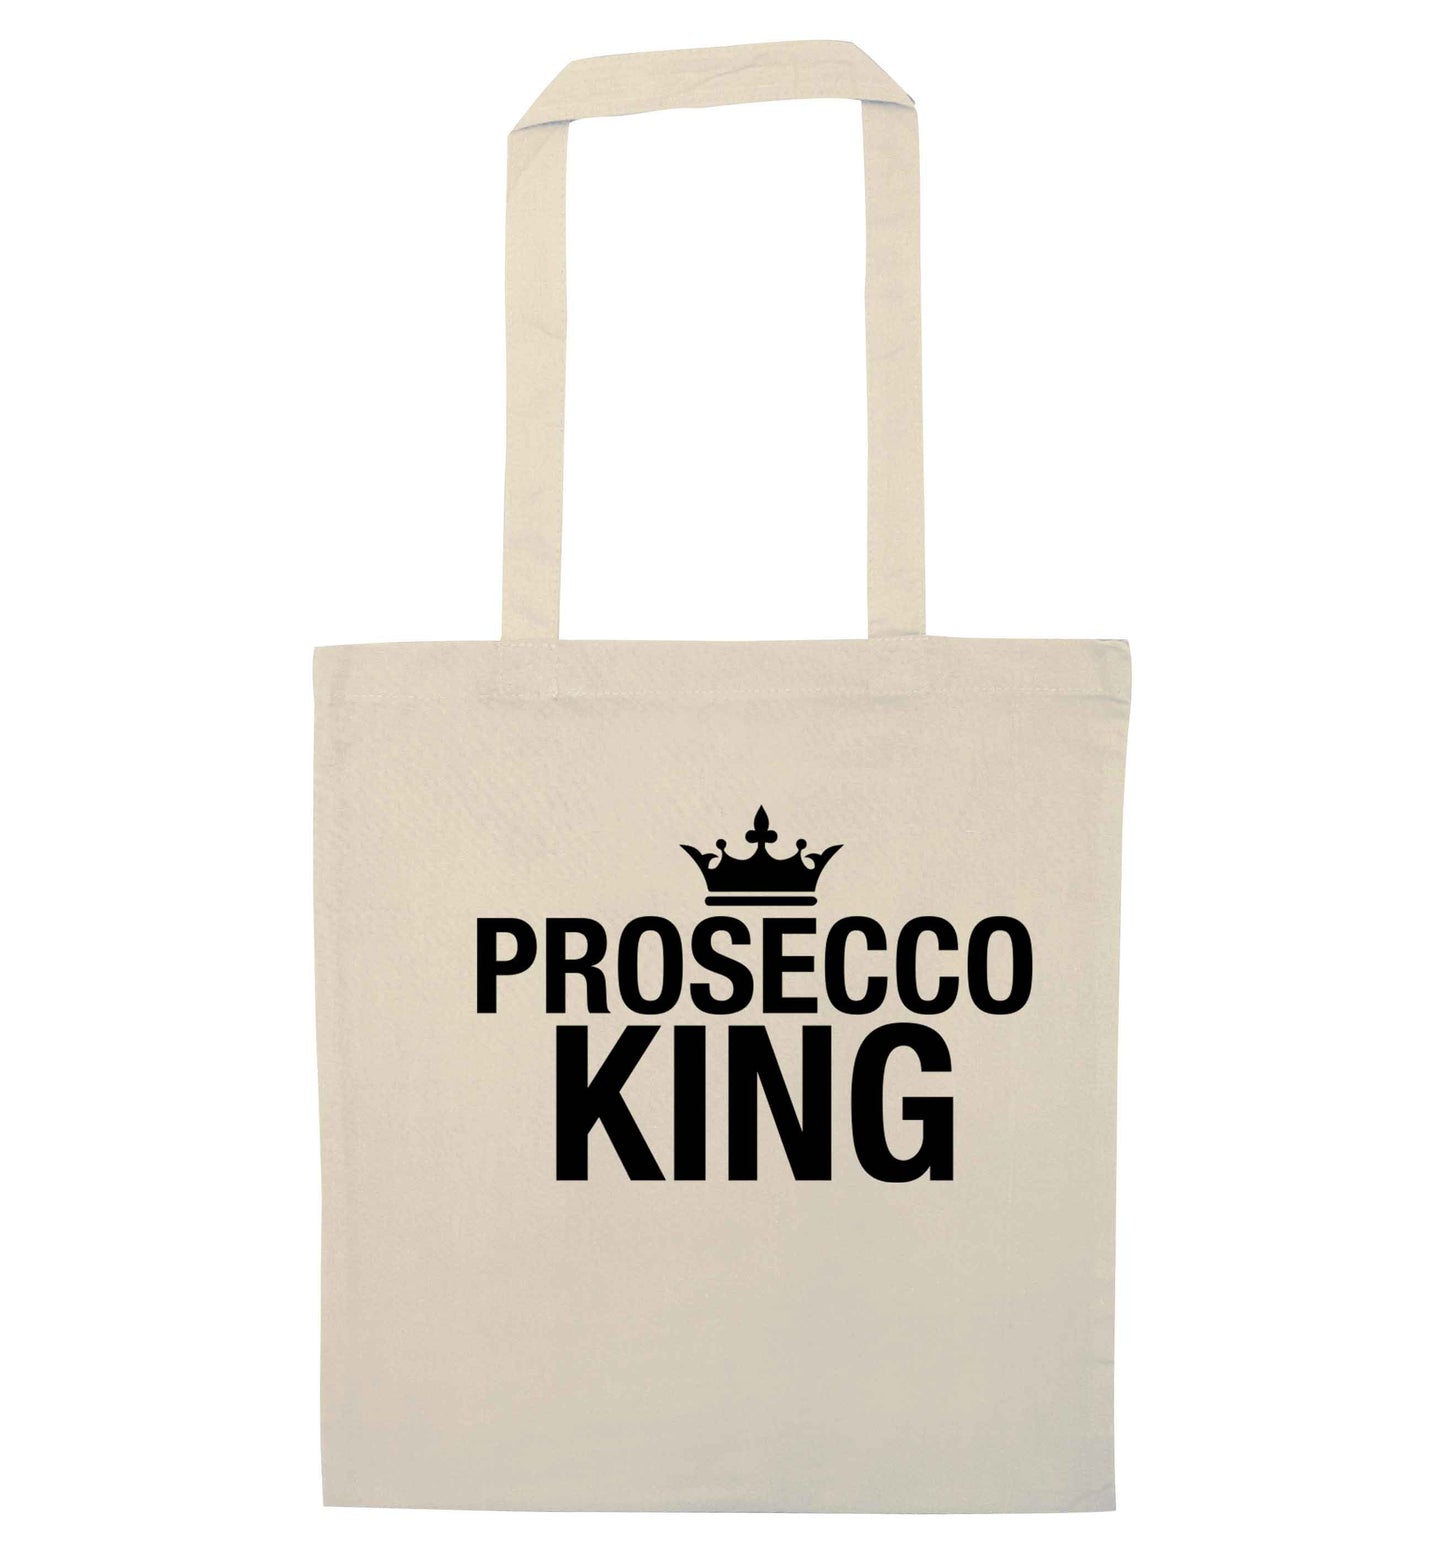 Prosecco king natural tote bag